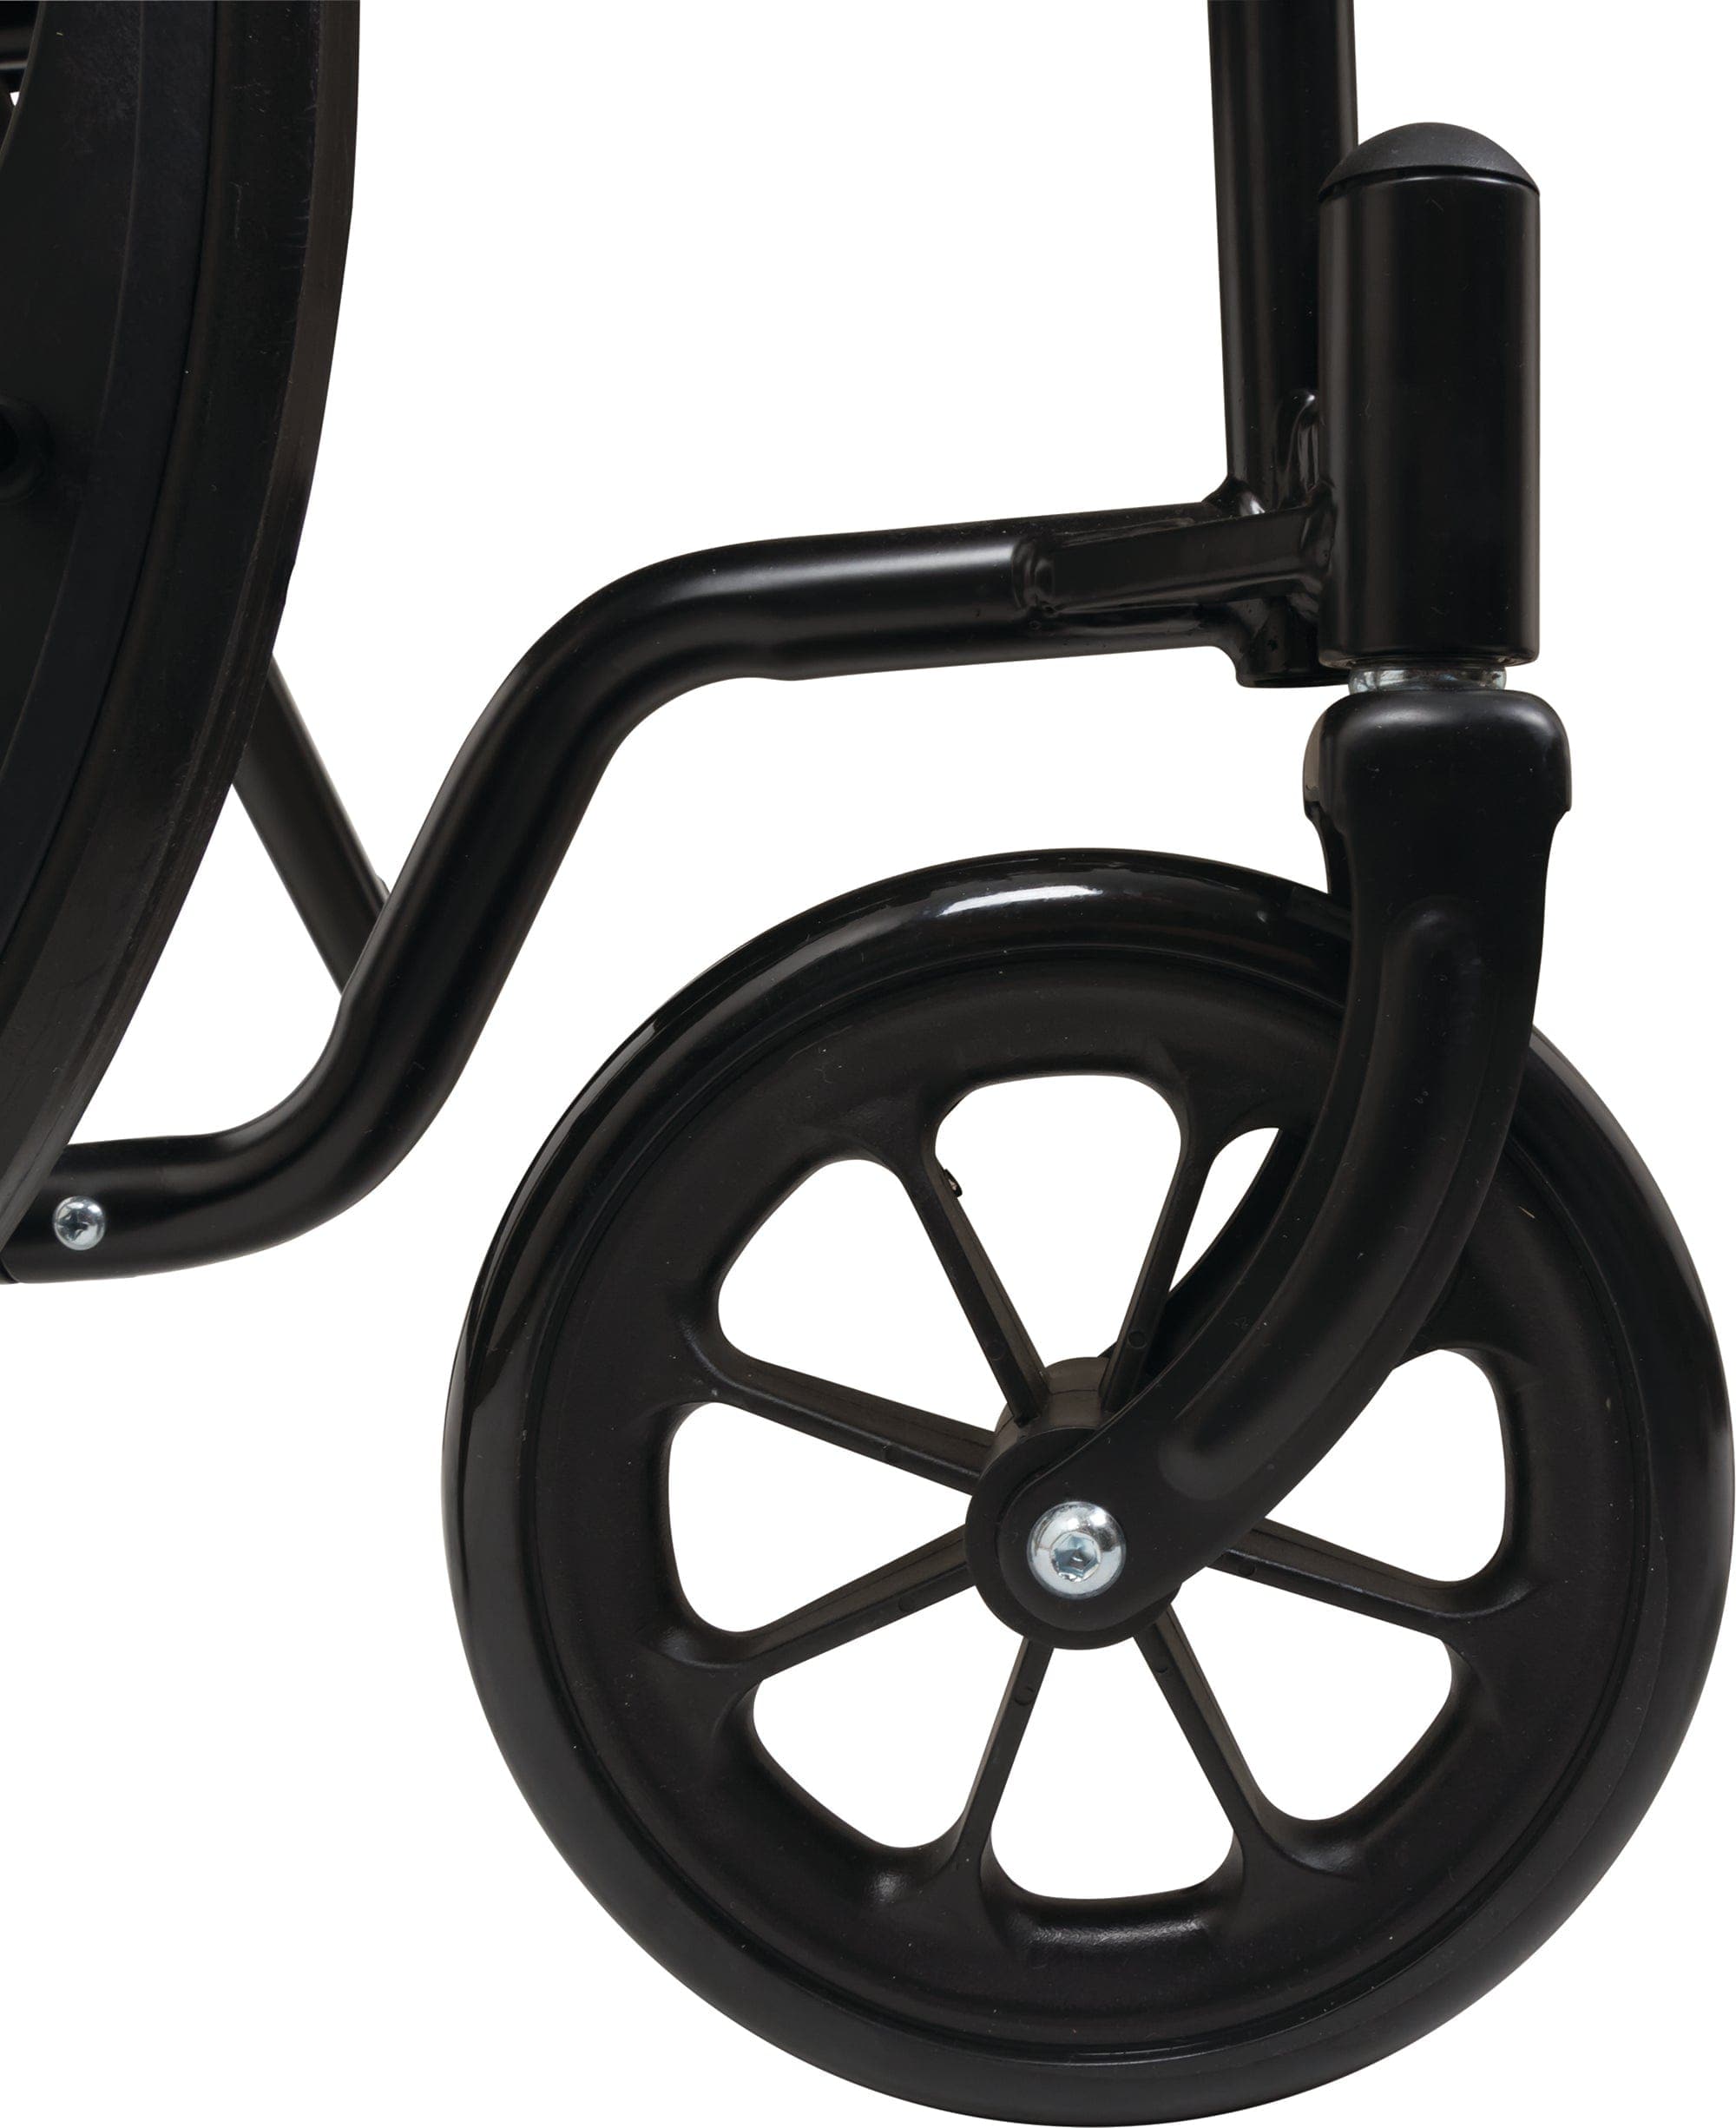 Compass Health Compass Health ProBasics K1 Lightweight Wheelchair with 16" x 16" Seat WC11616DE